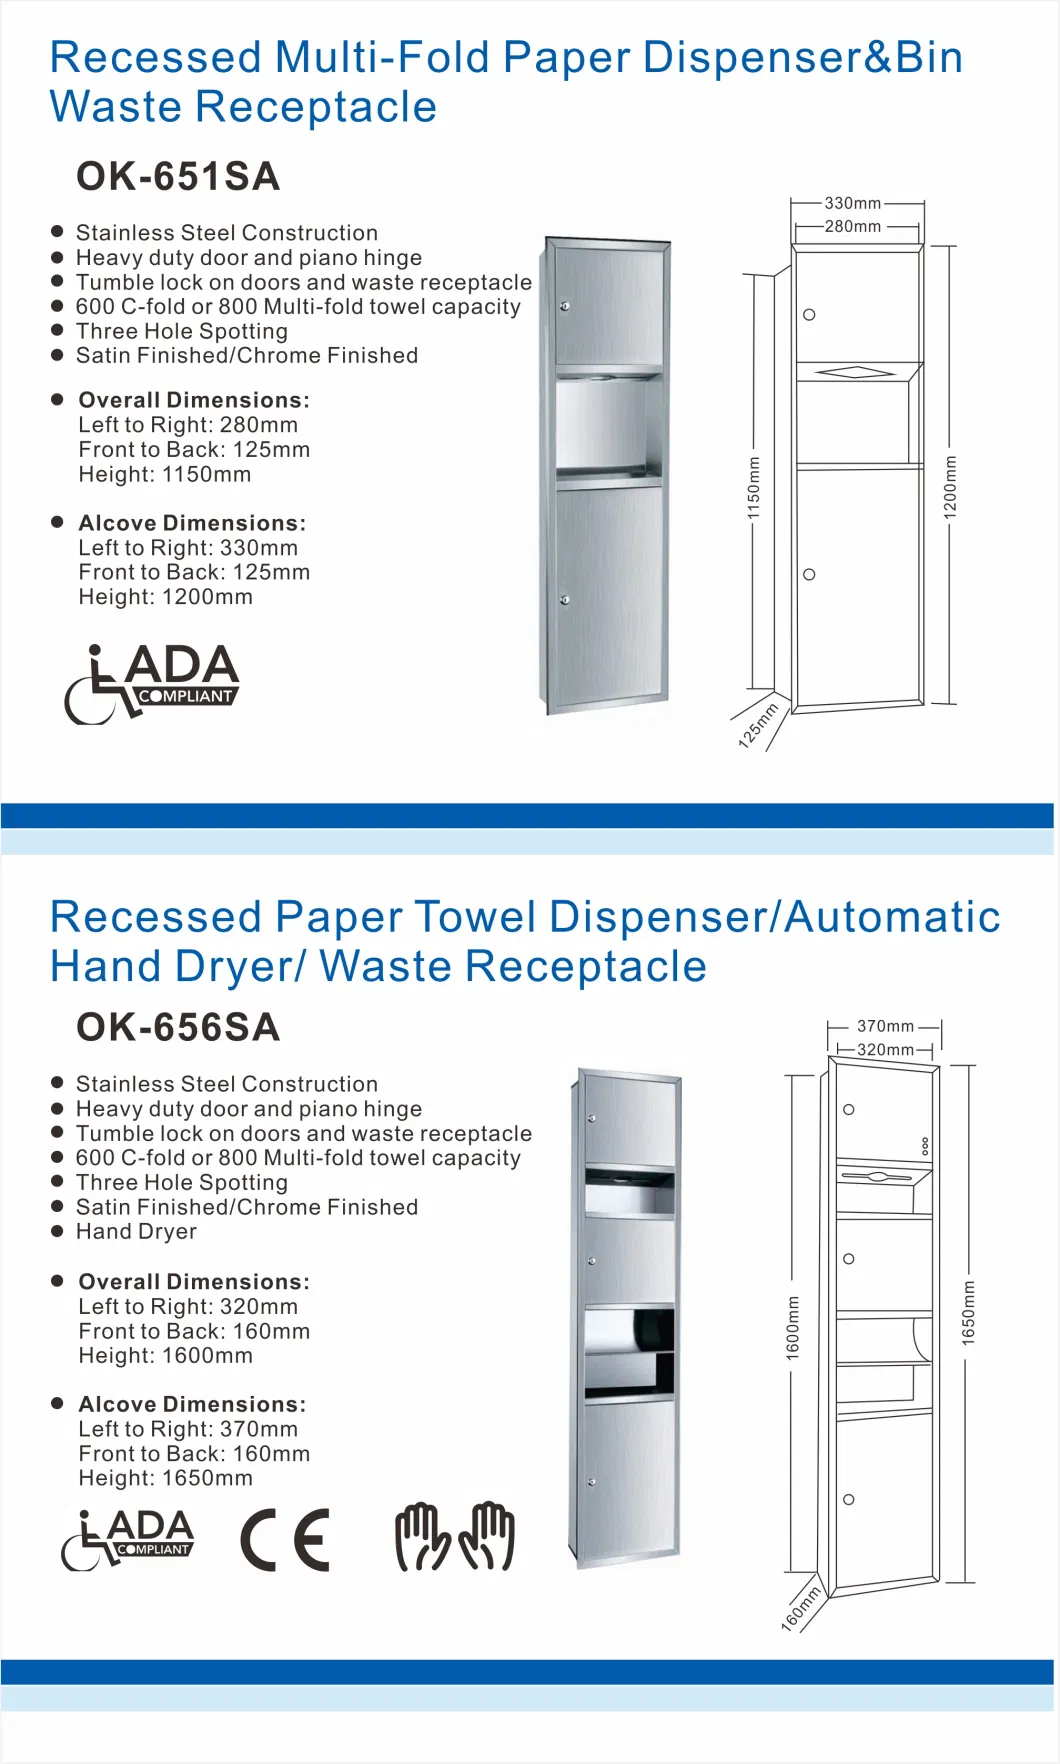 Commercial Recessed Paper Towel Dispenser/Waste Bin Receptacle, Stailess Steel